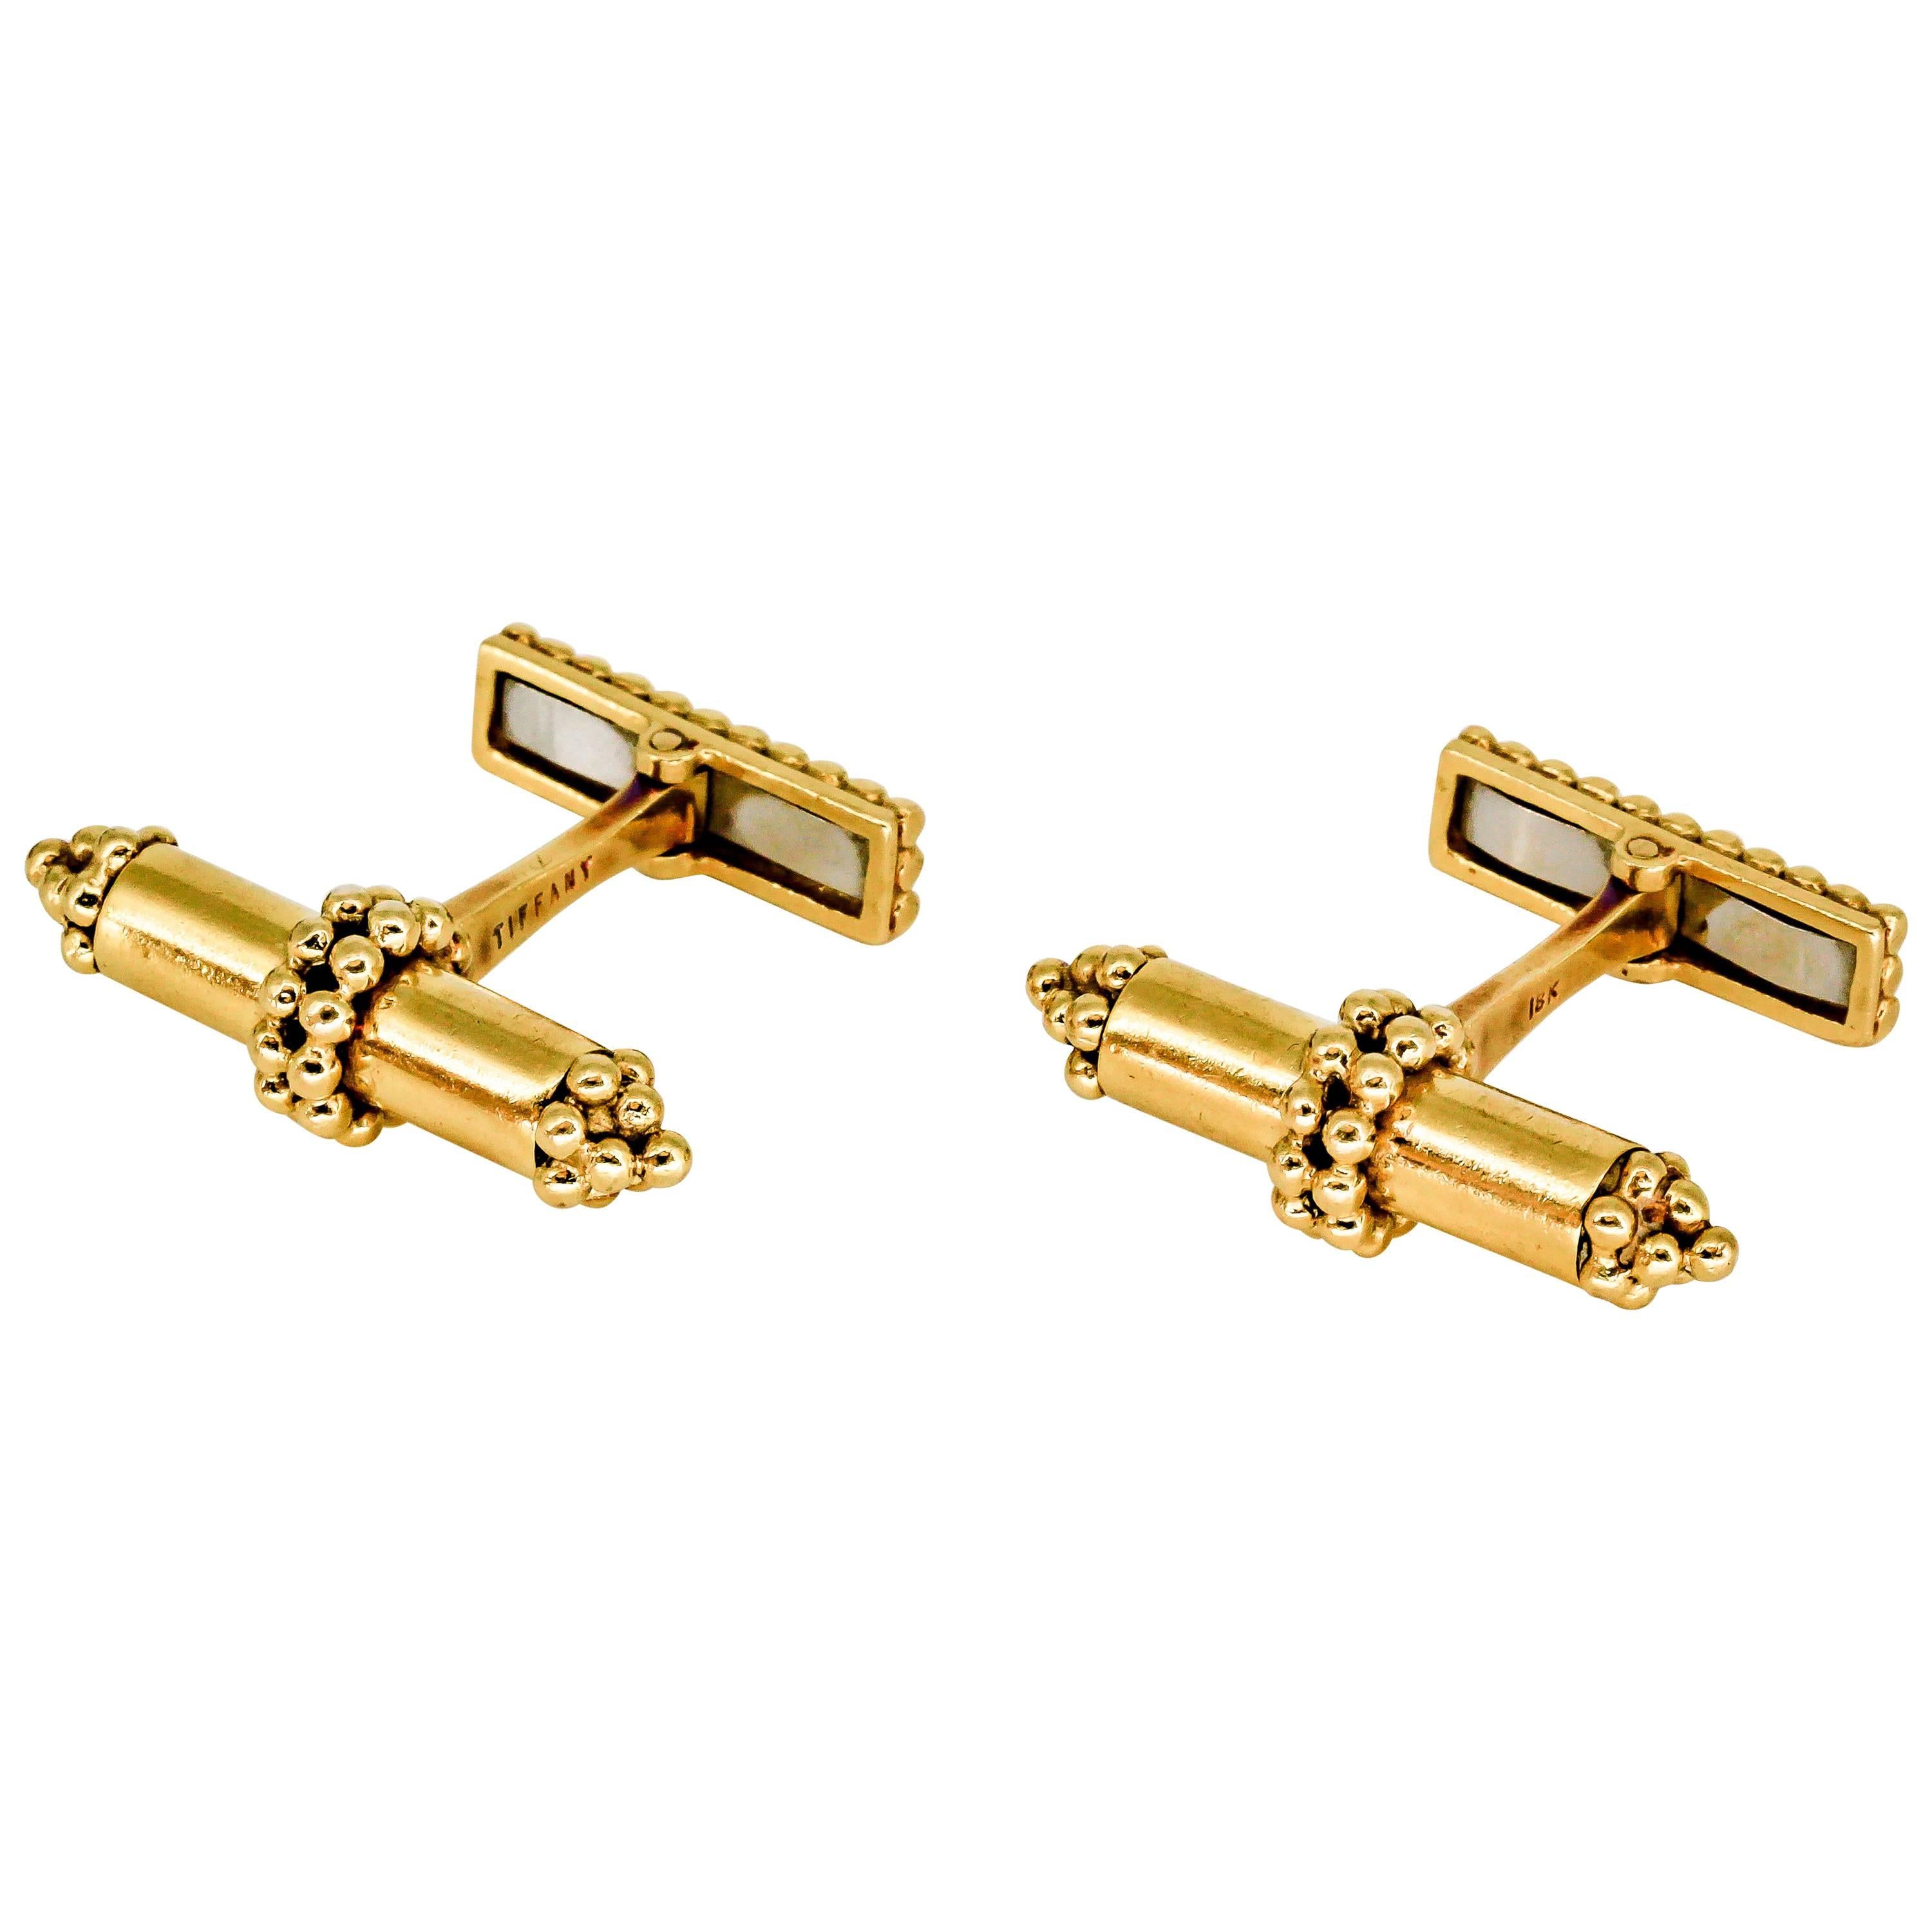 Tiffany & Co. Gold Articulated Bar Cufflinks